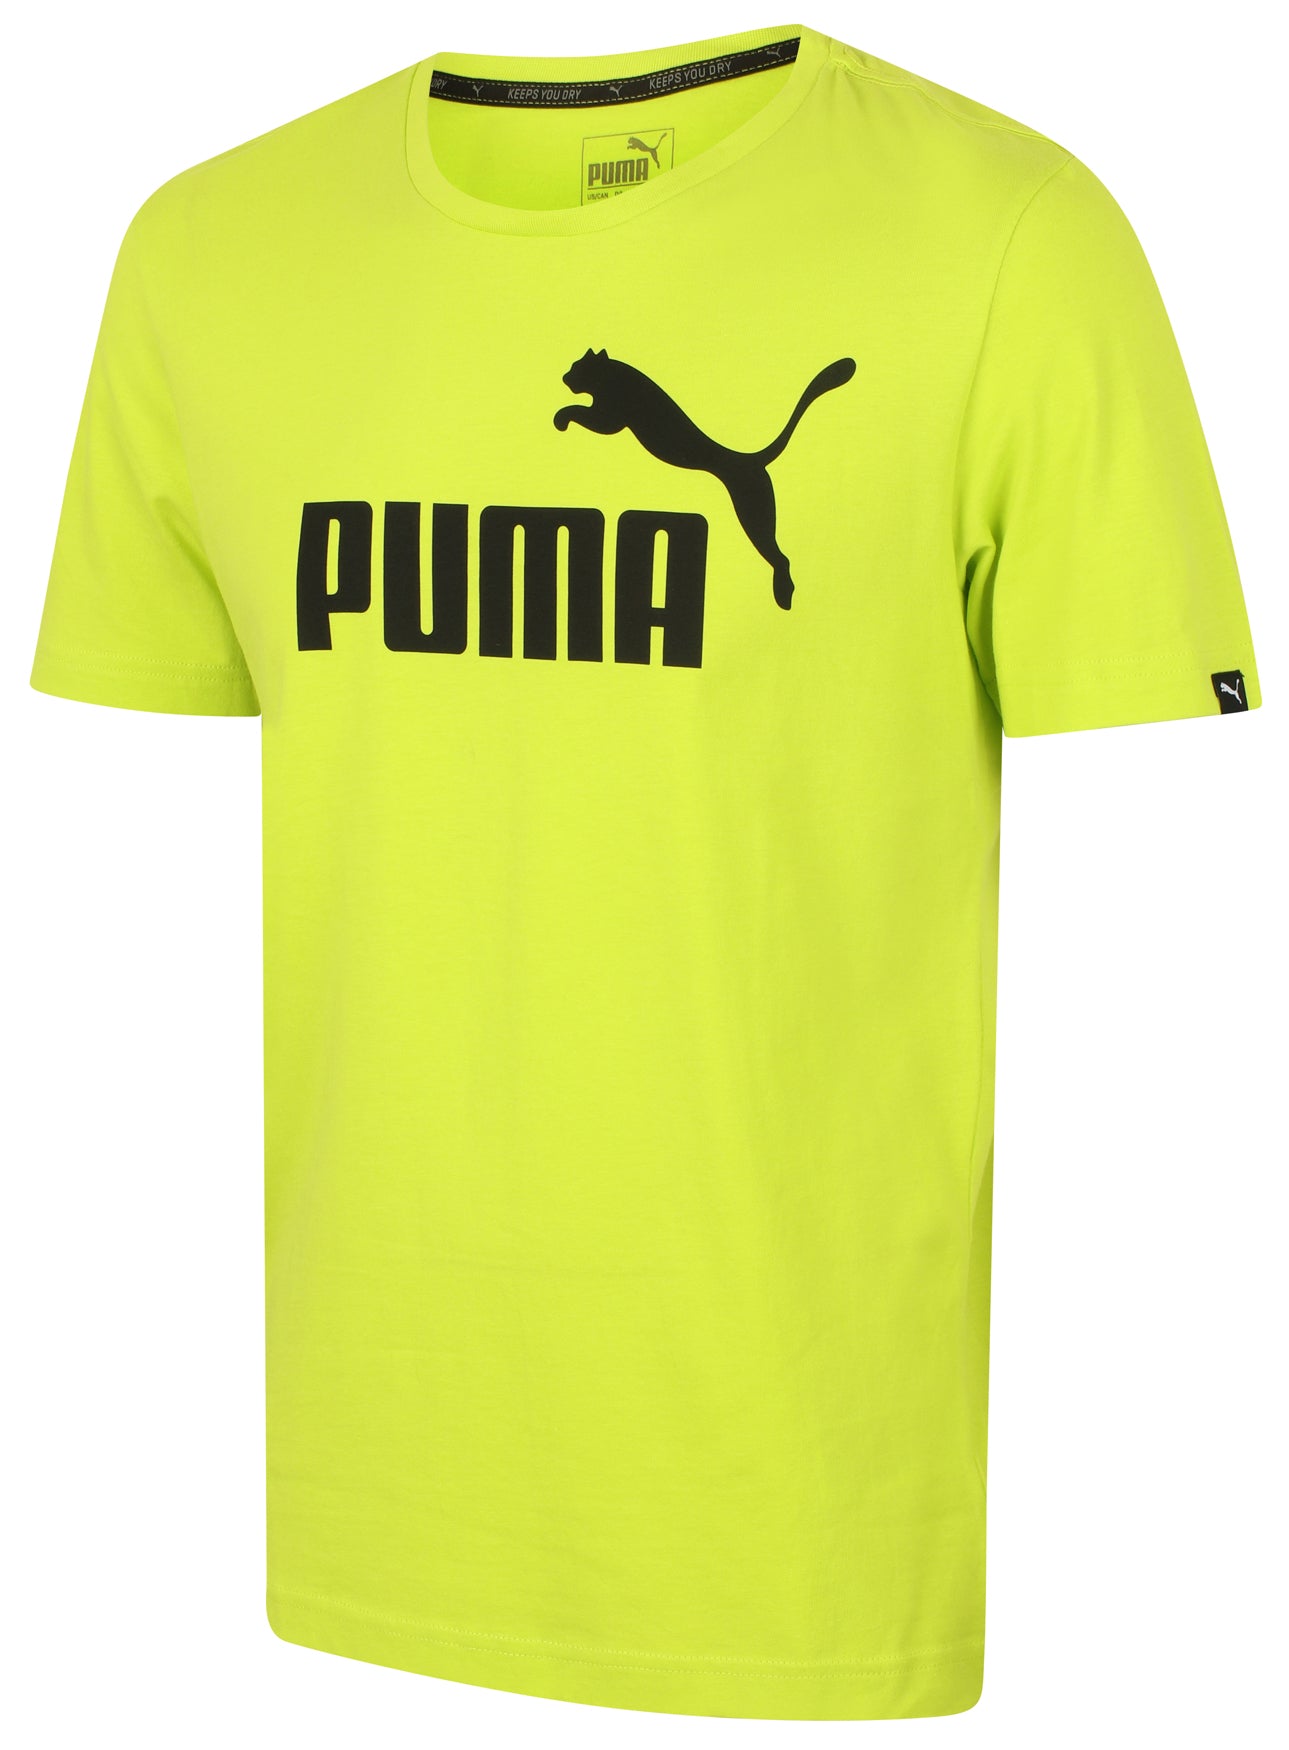 lime green puma shirt